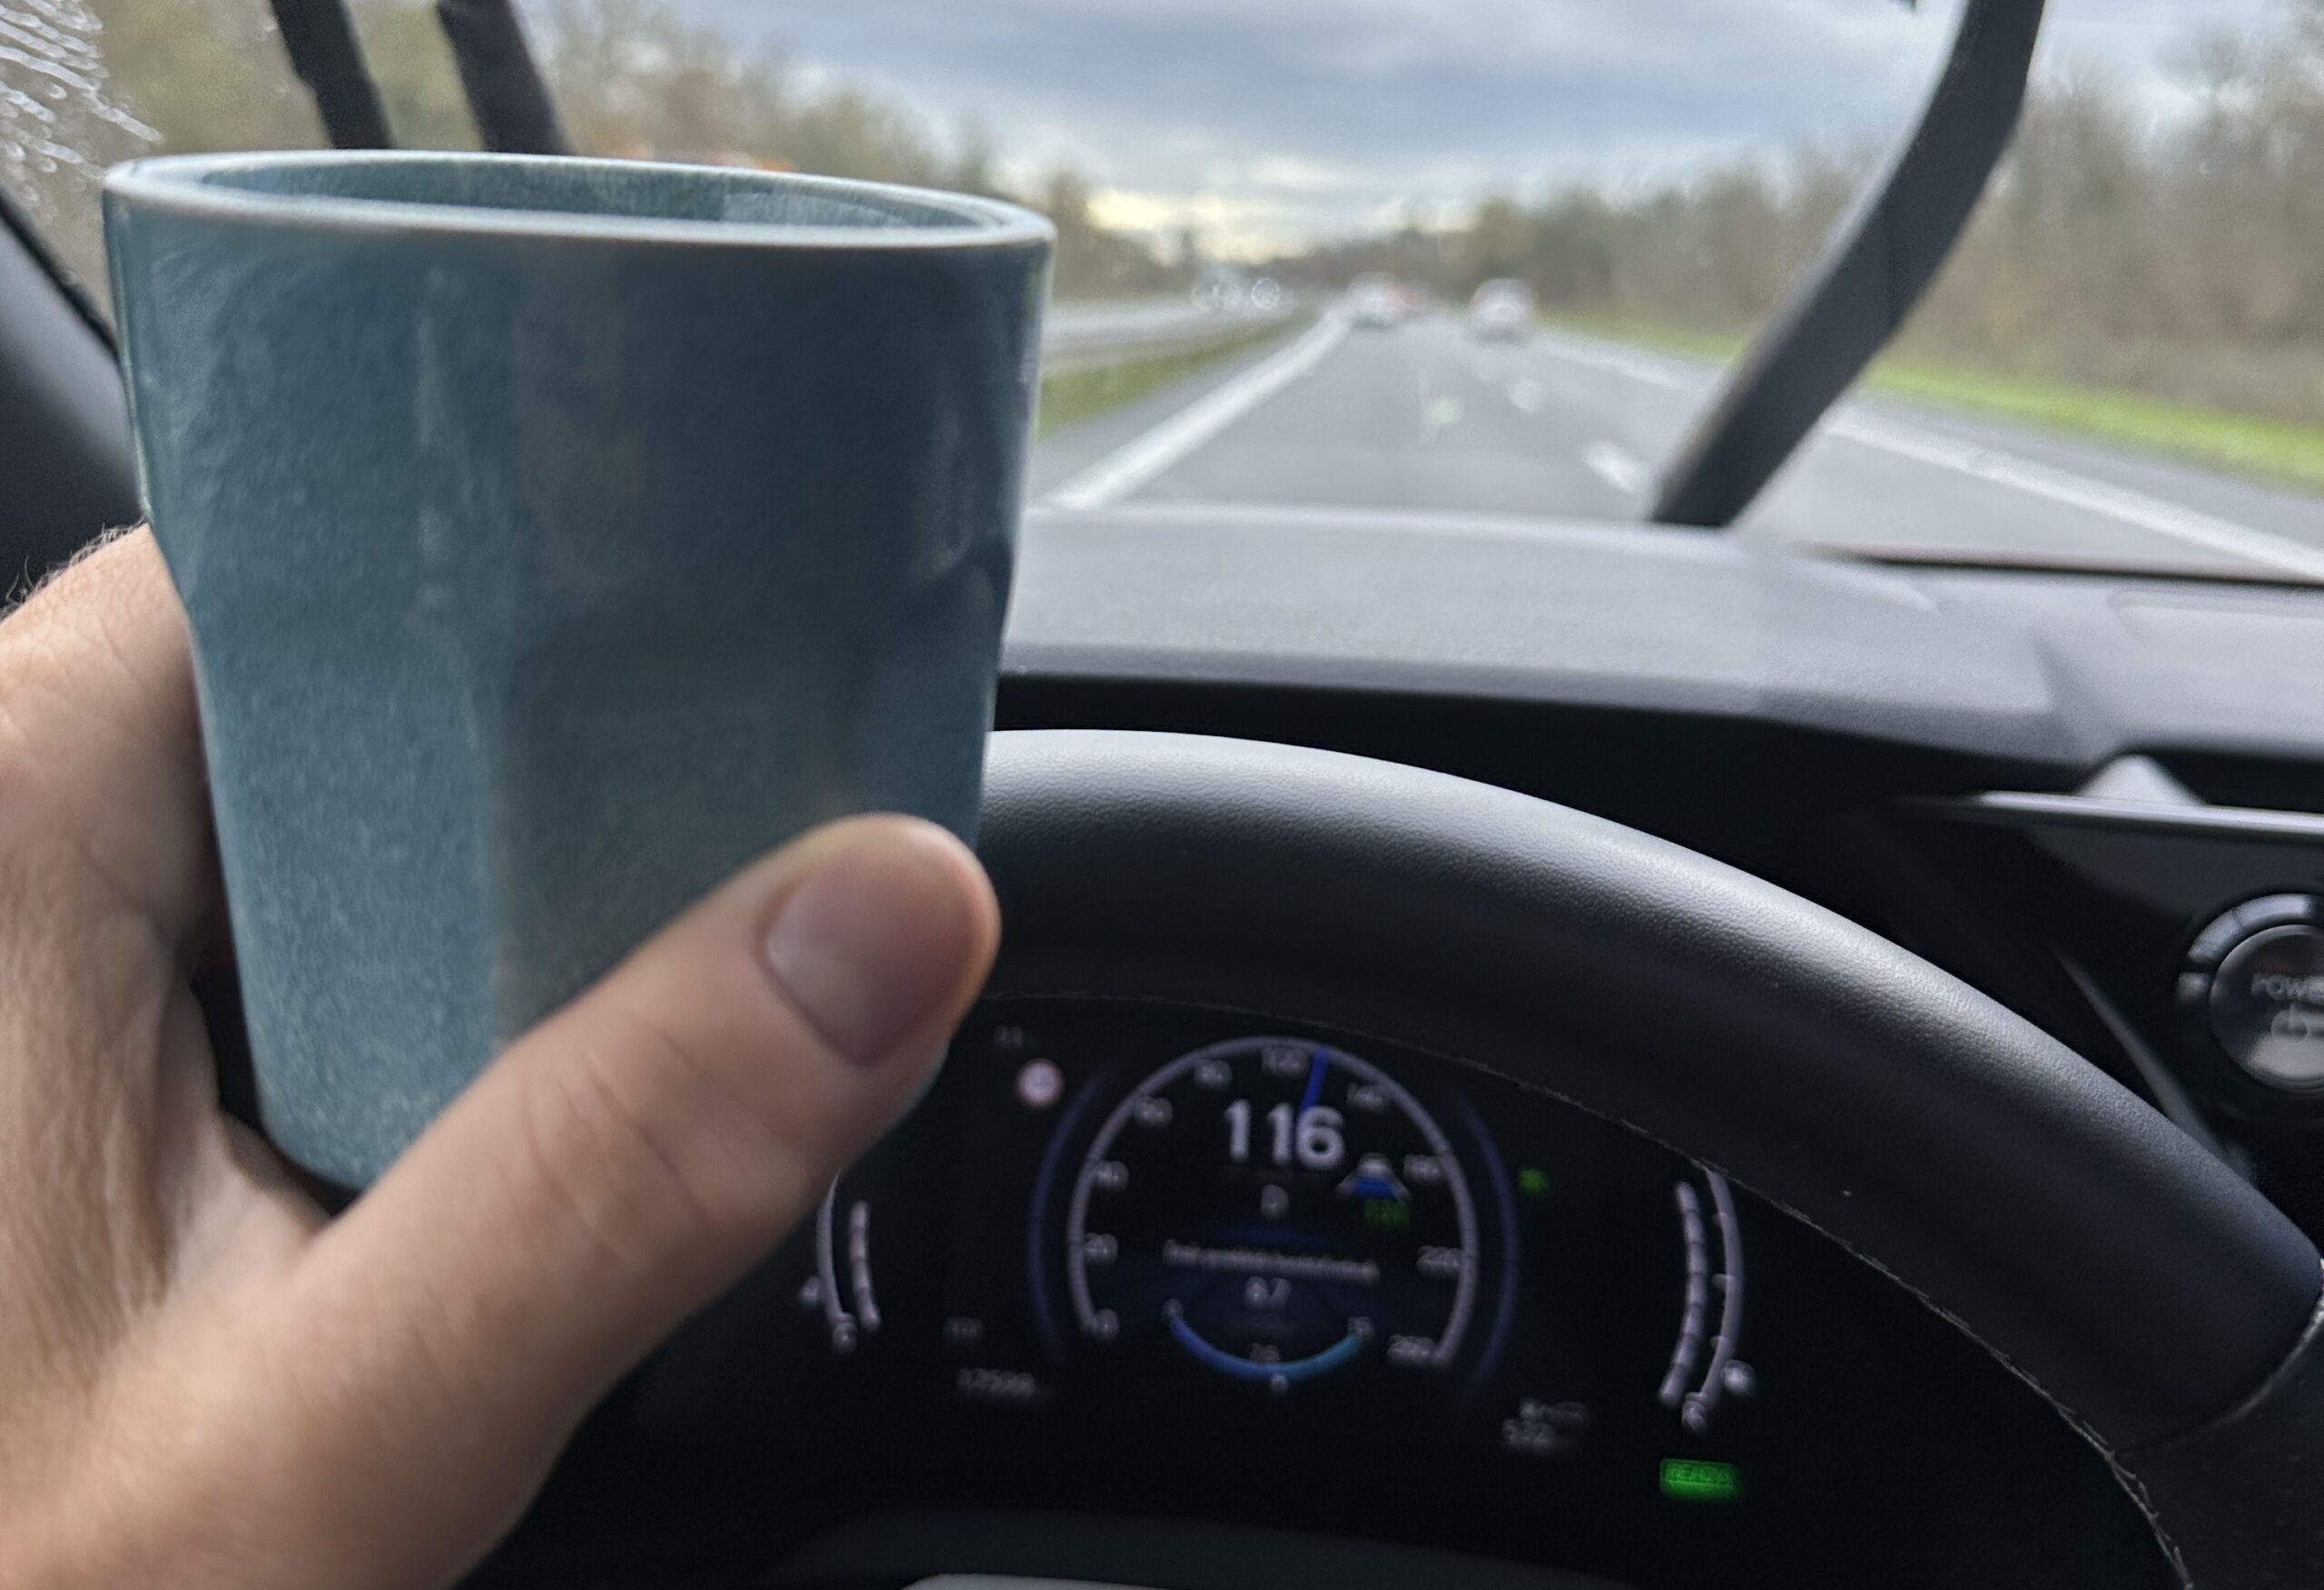 Doe mee met ons snelweg koffie onderzoek!